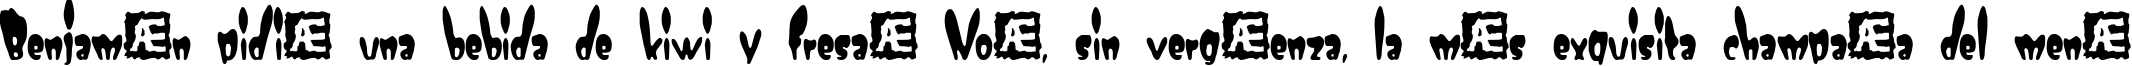 Пример написания шрифтом Numskull BRK текста на испанском